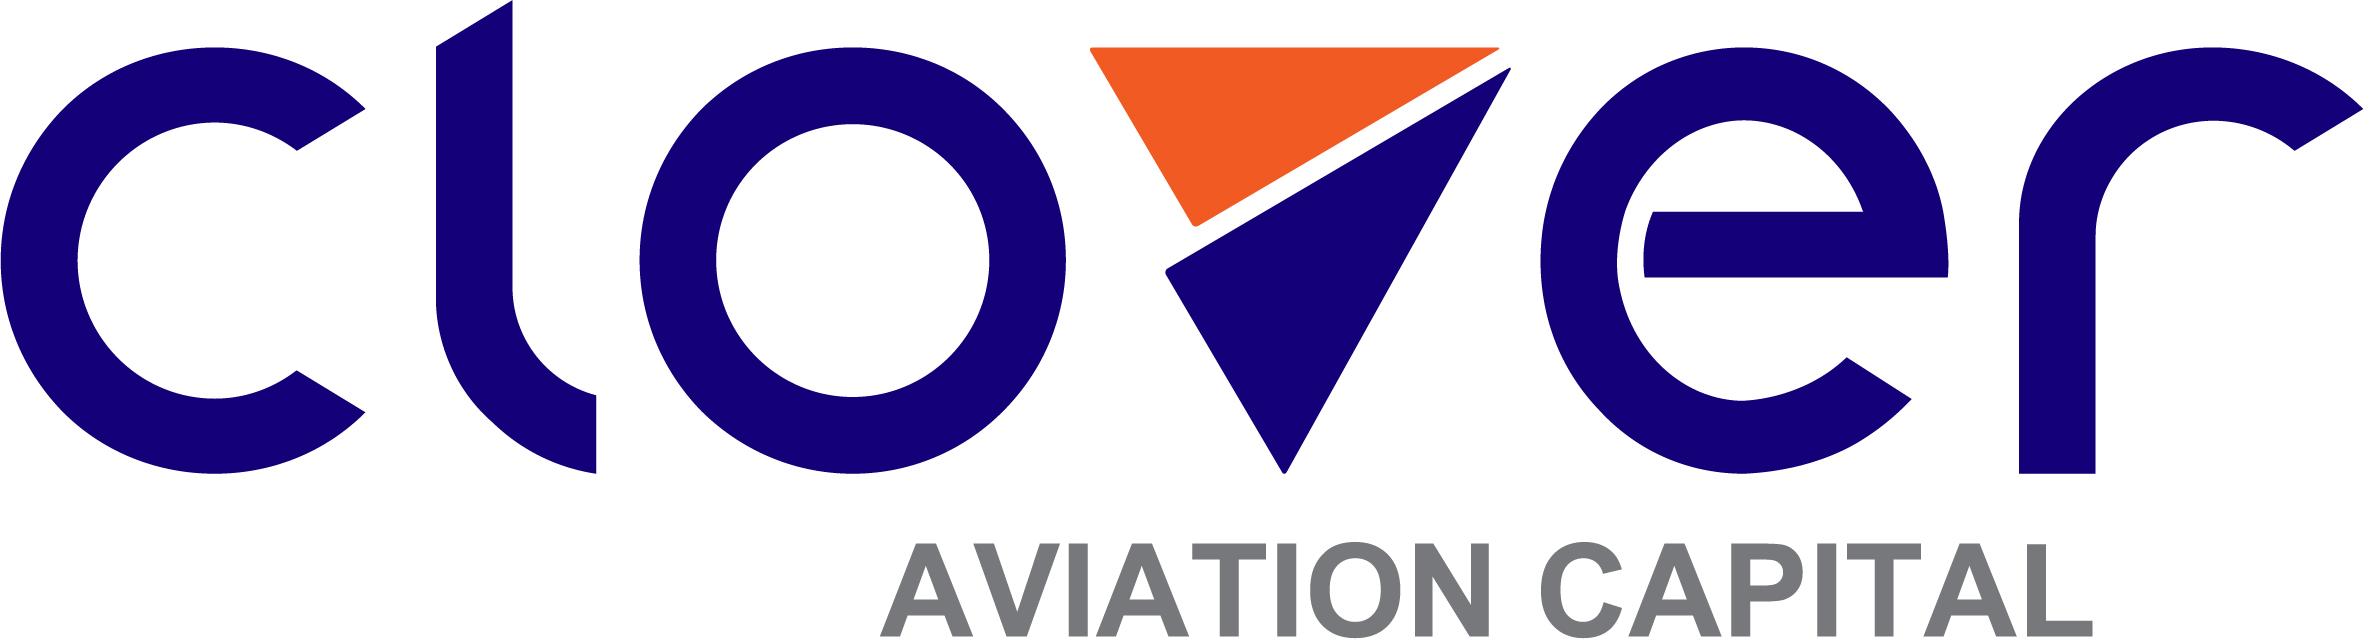 Clover Aviation Capital Company Limited